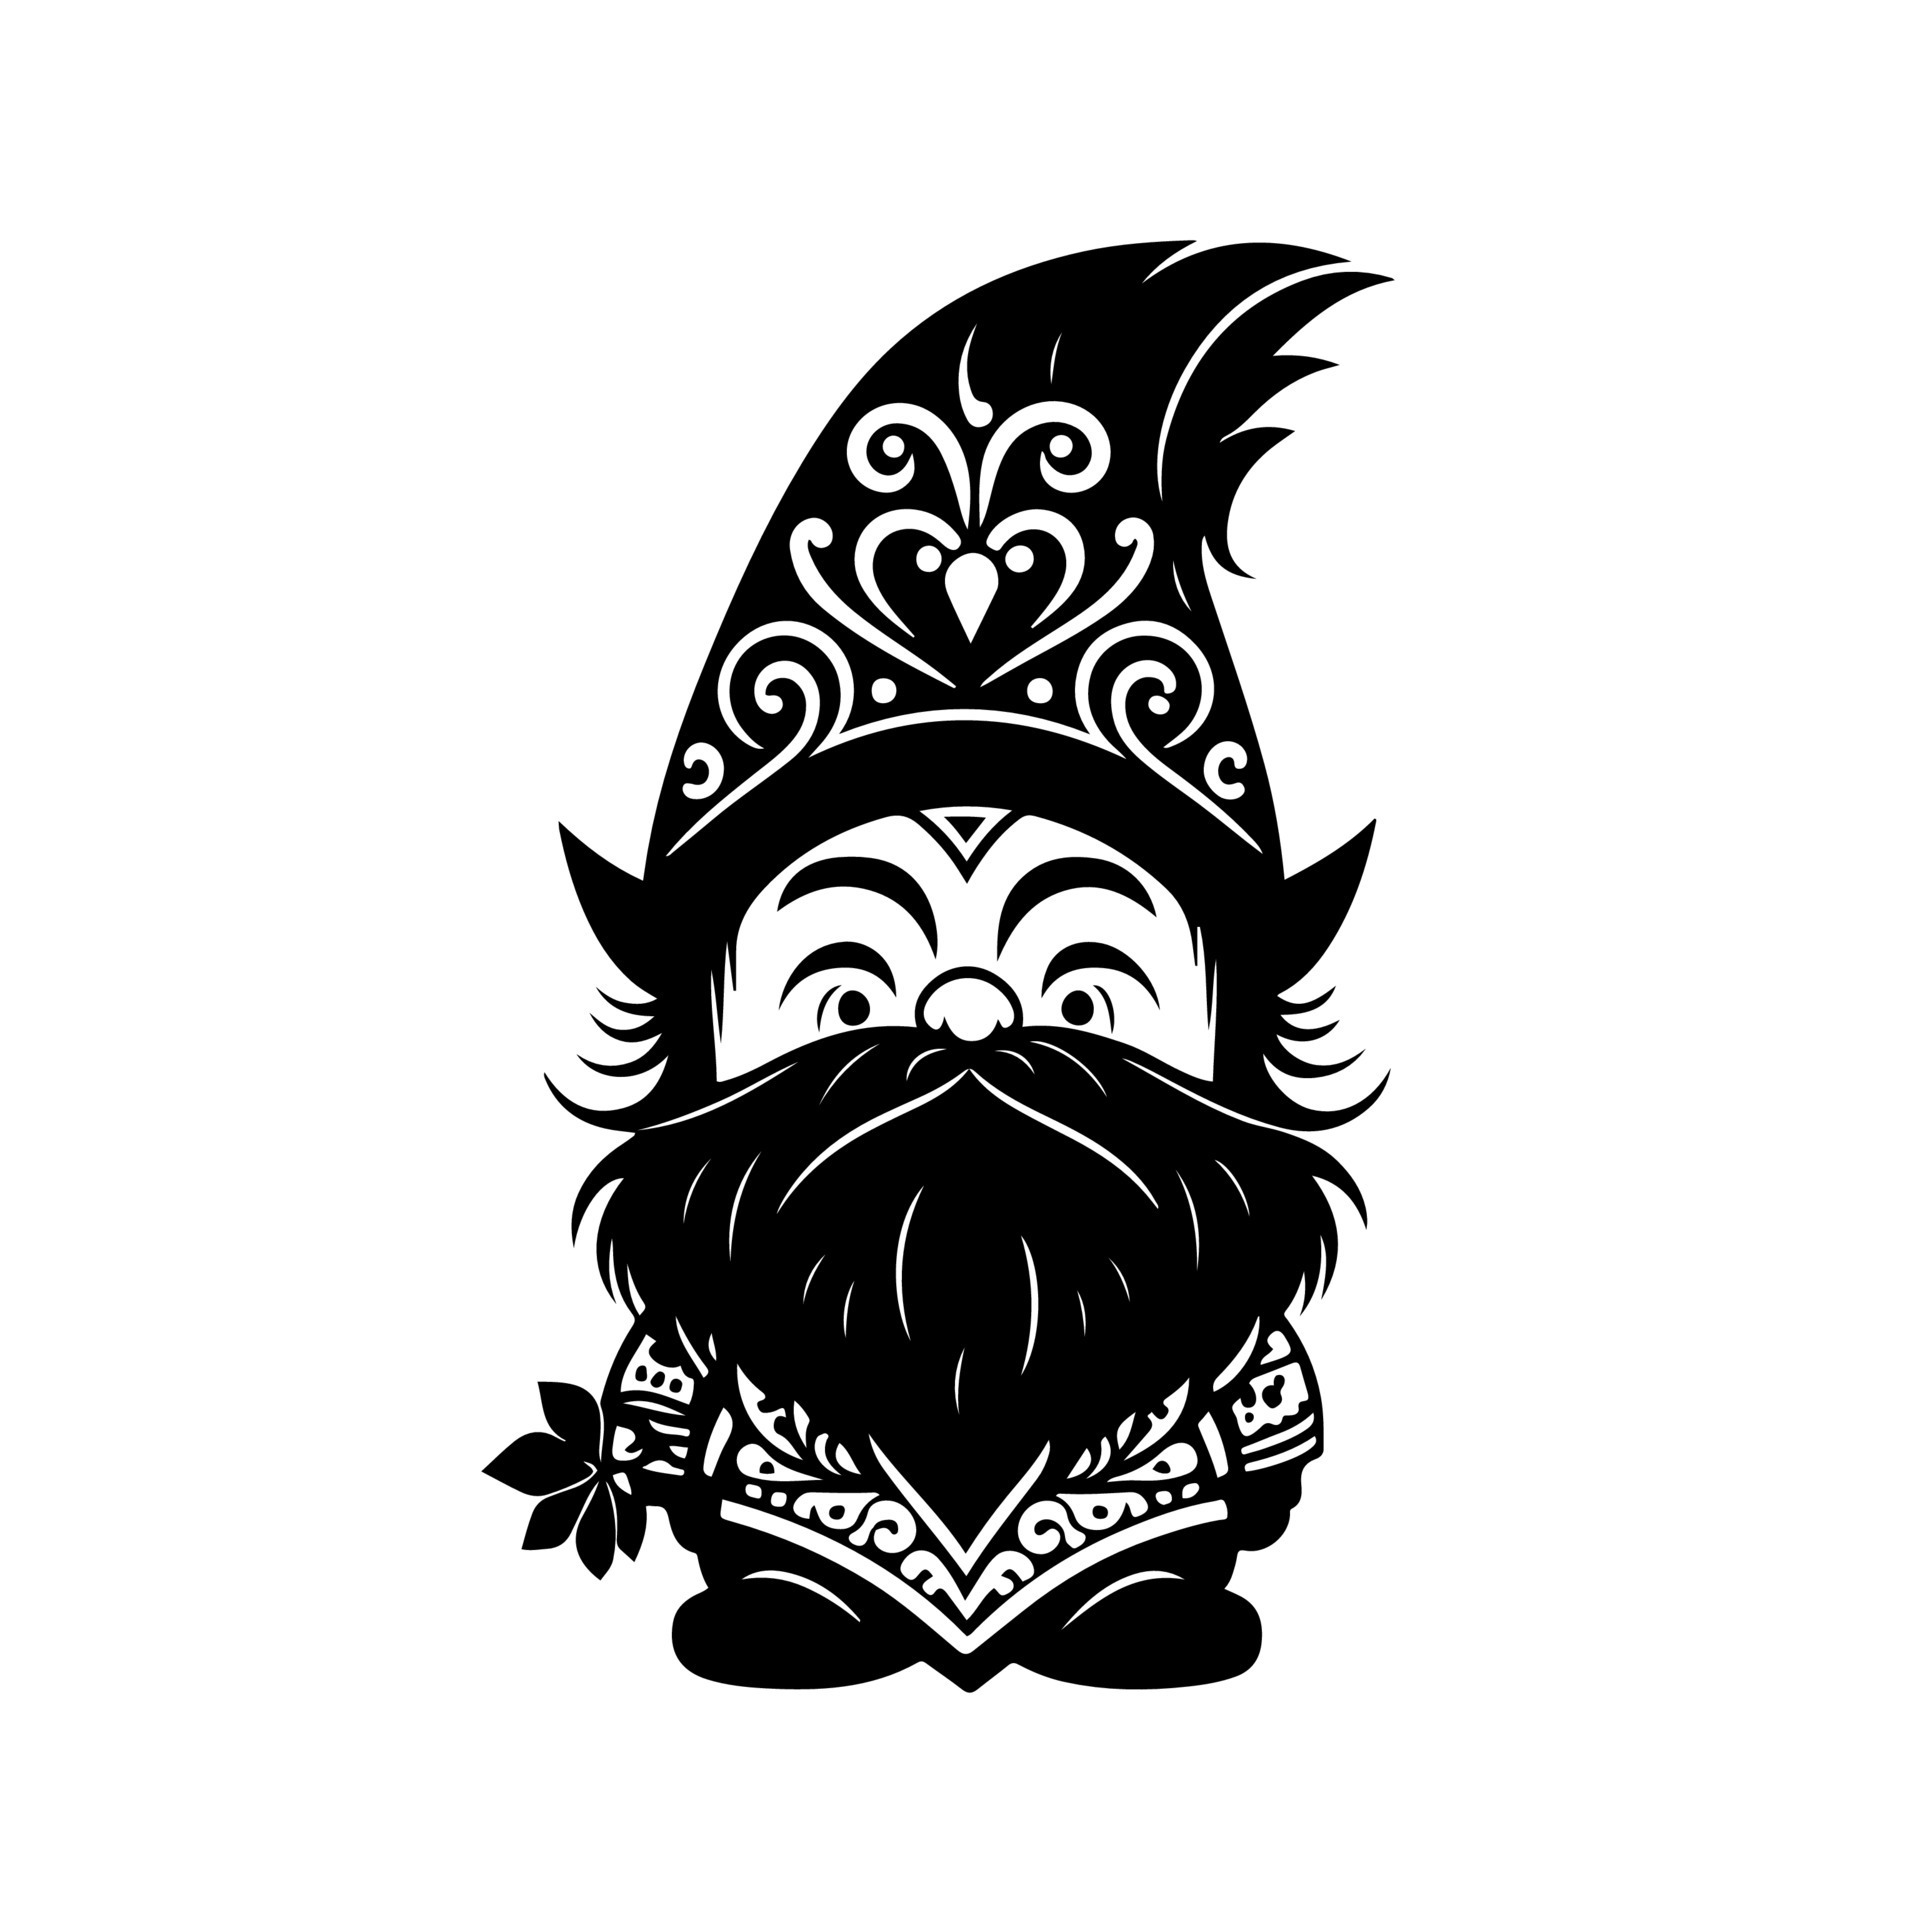 60 Gnome Tattoo Illustrations RoyaltyFree Vector Graphics  Clip Art   iStock